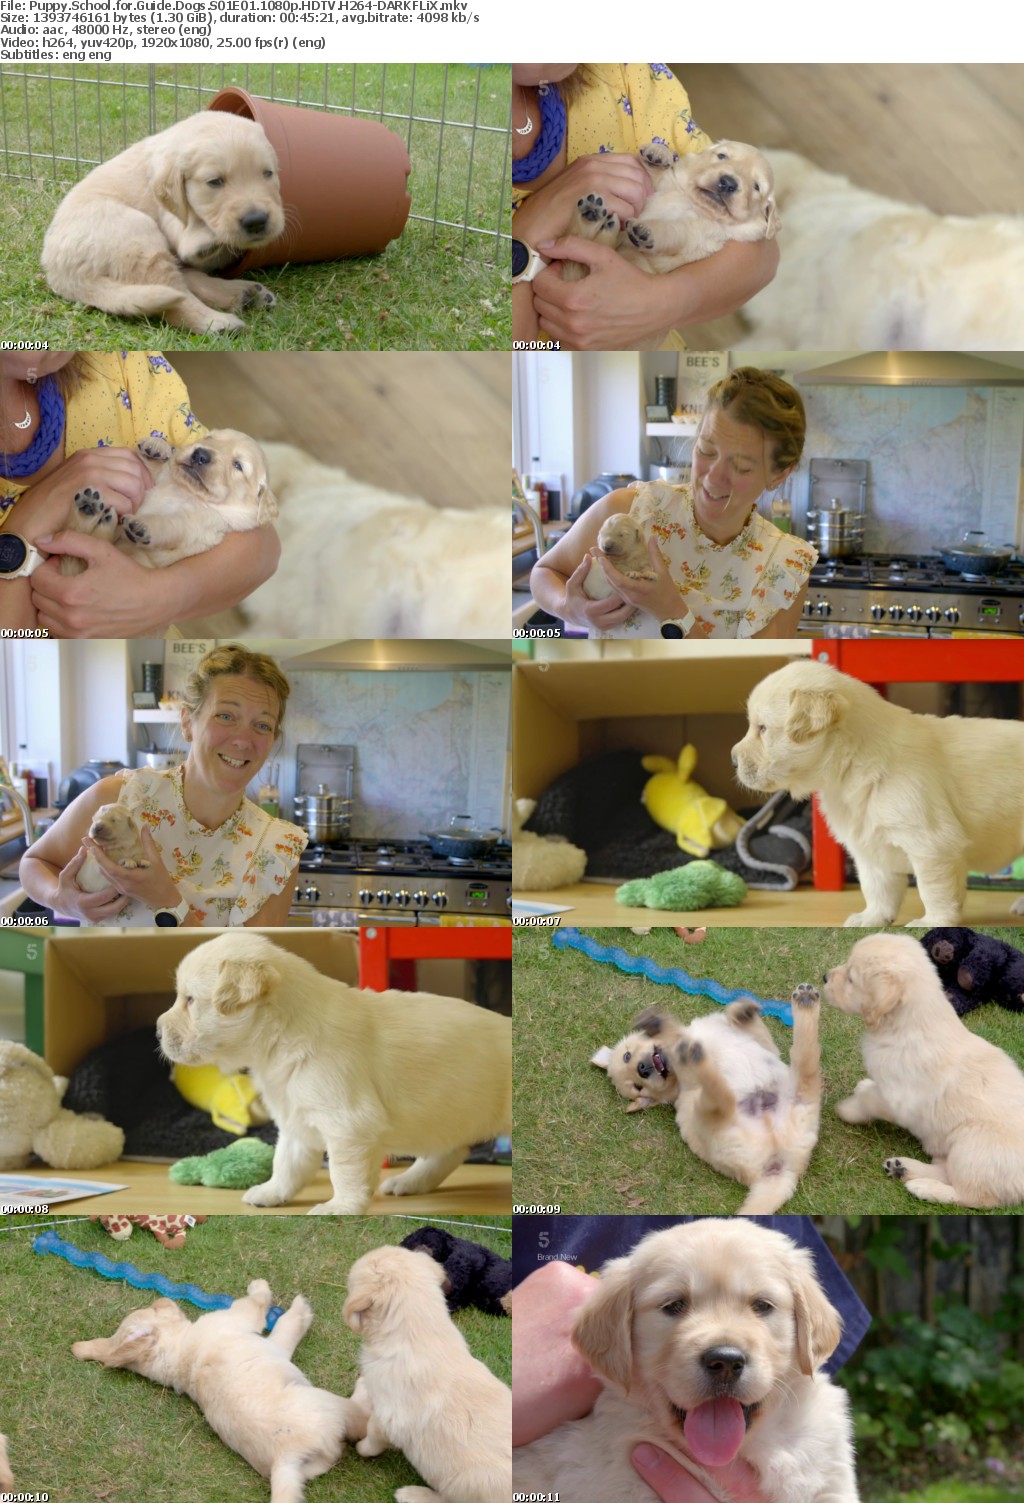 Puppy School for Guide Dogs S01E01 1080p HDTV H264-DARKFLiX